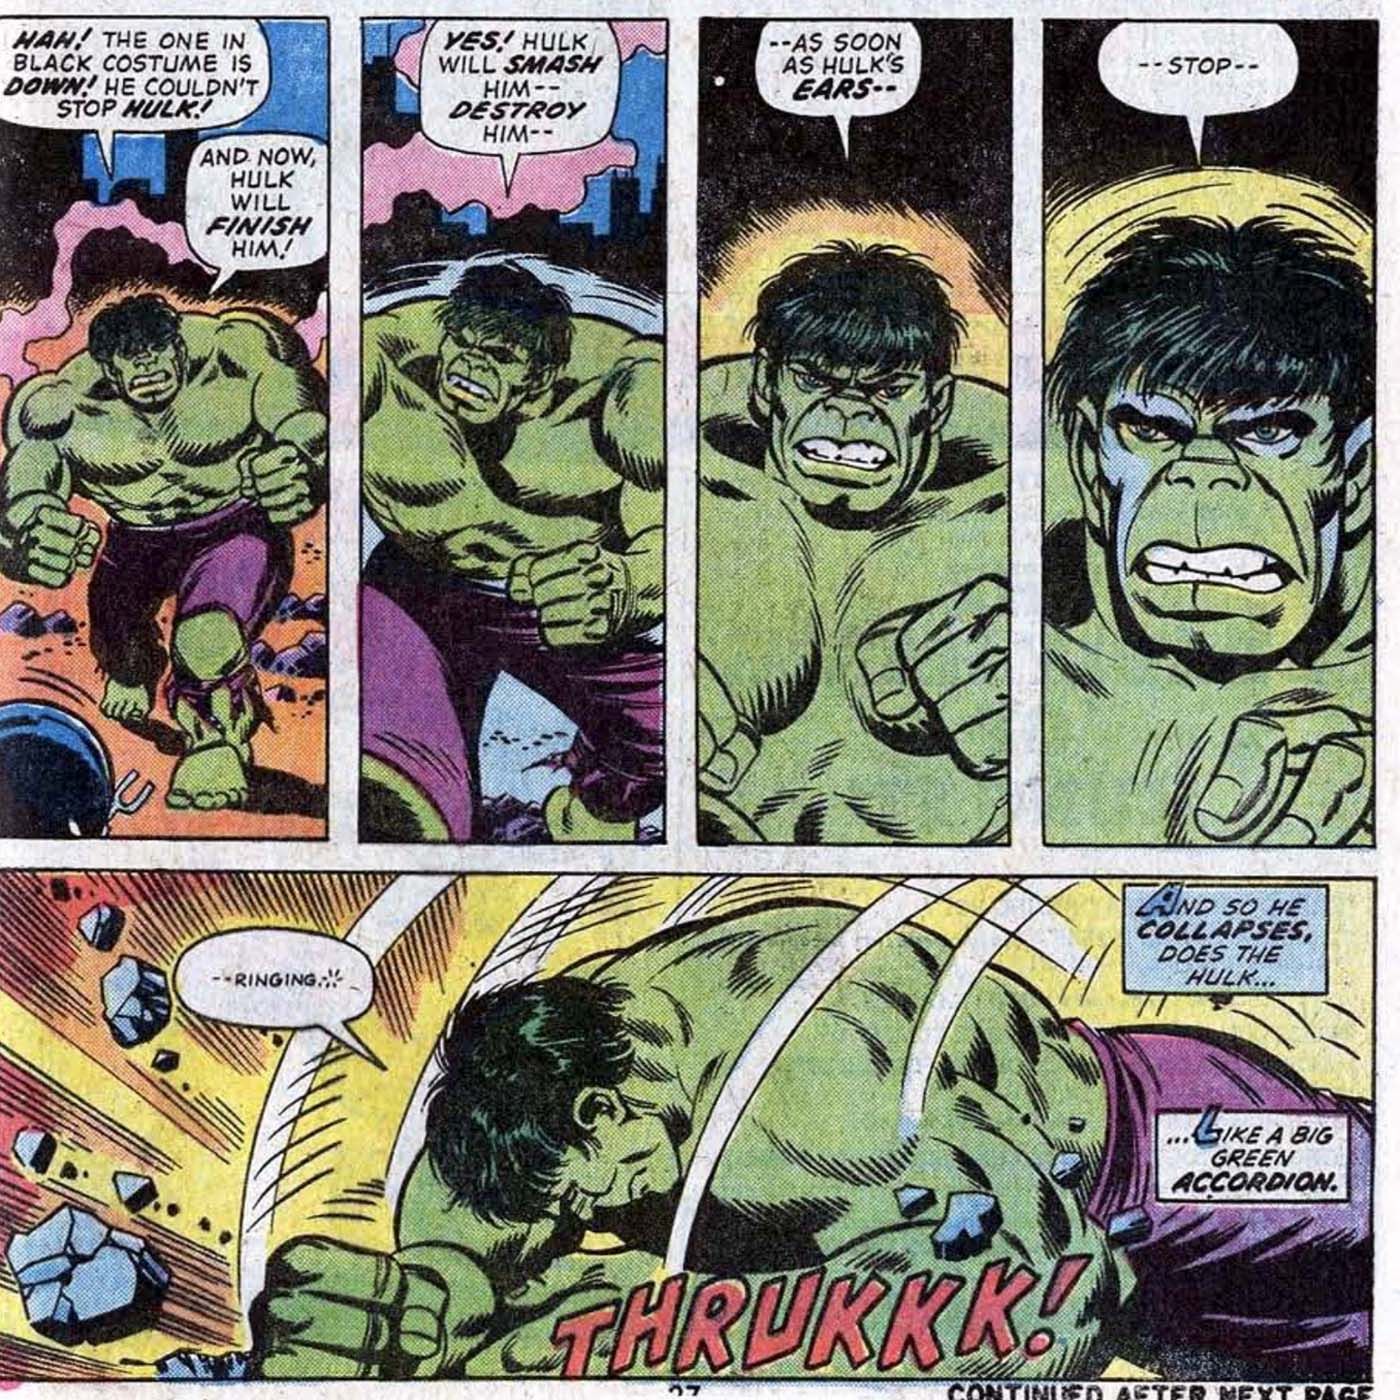 Black Bolt vs. Hulk